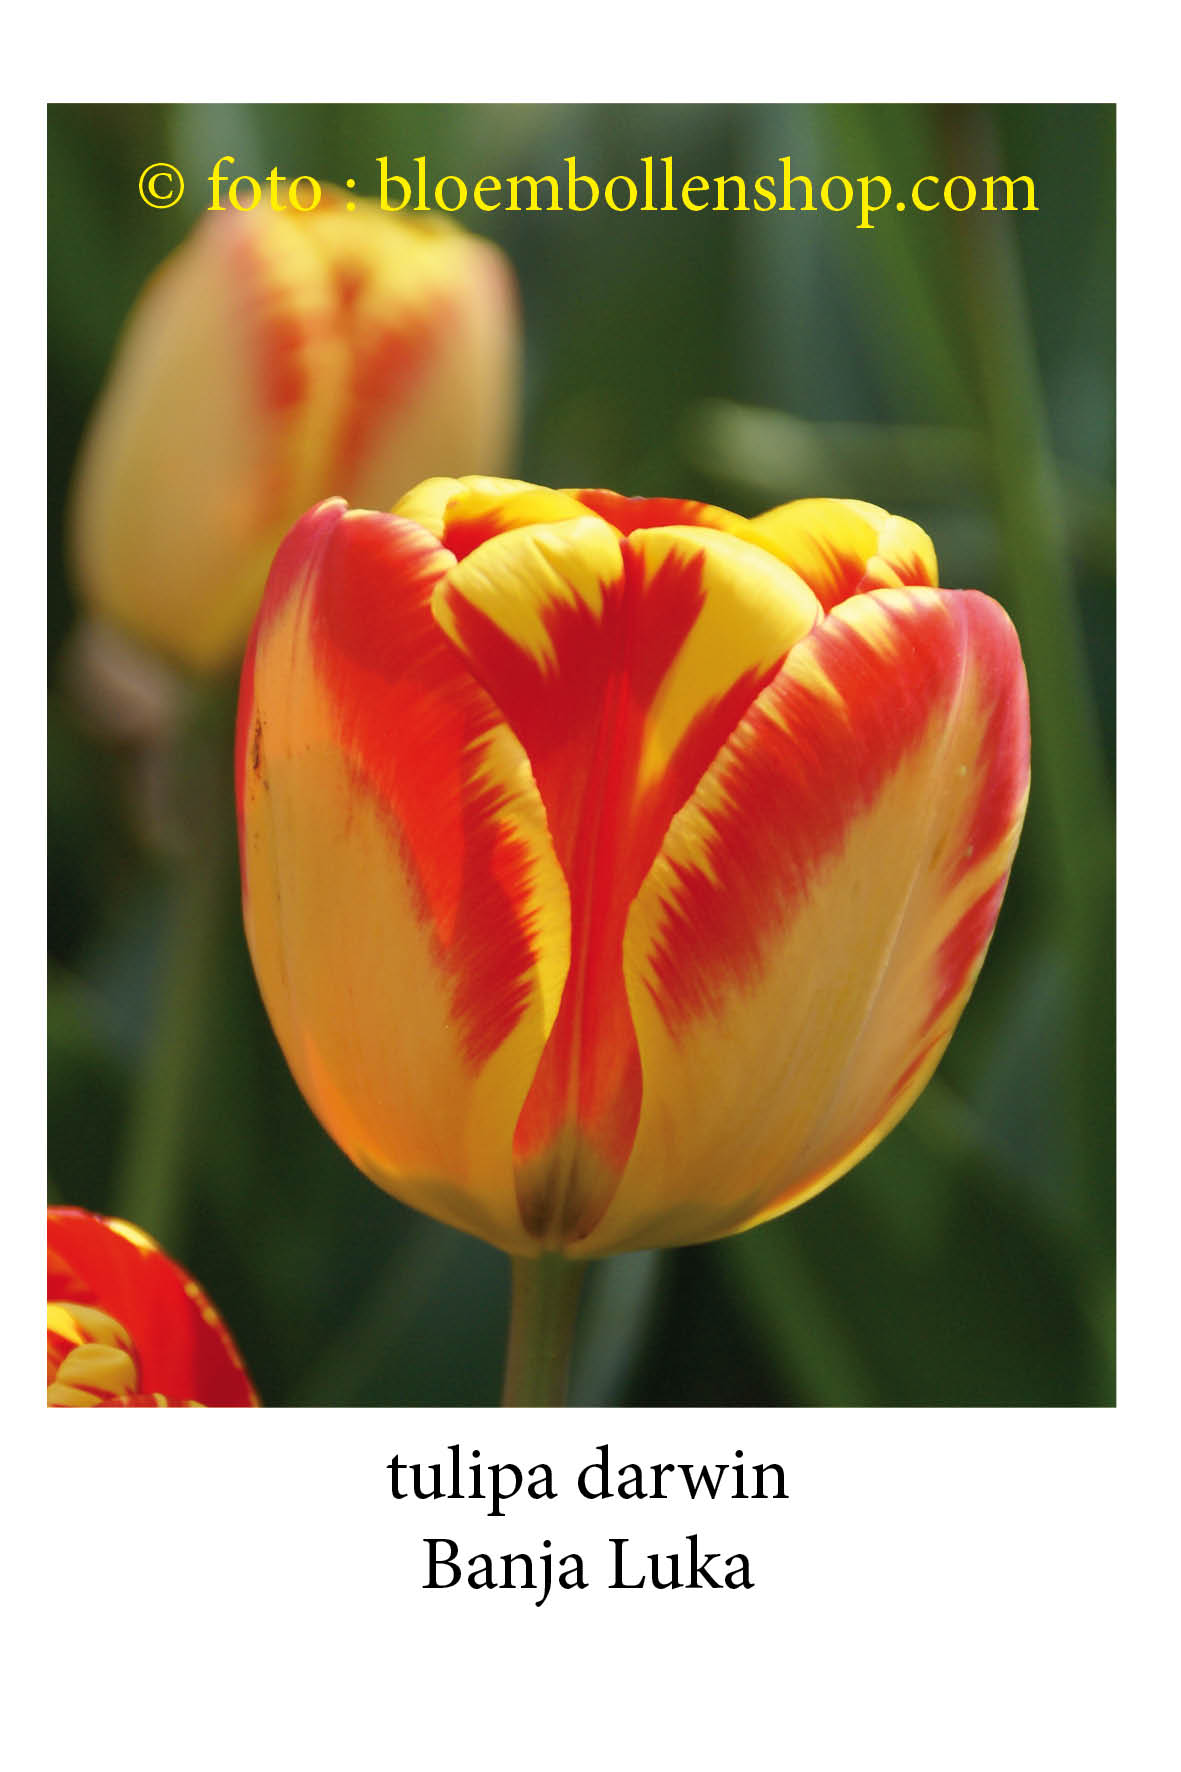 Tulpen Flaming Agrass